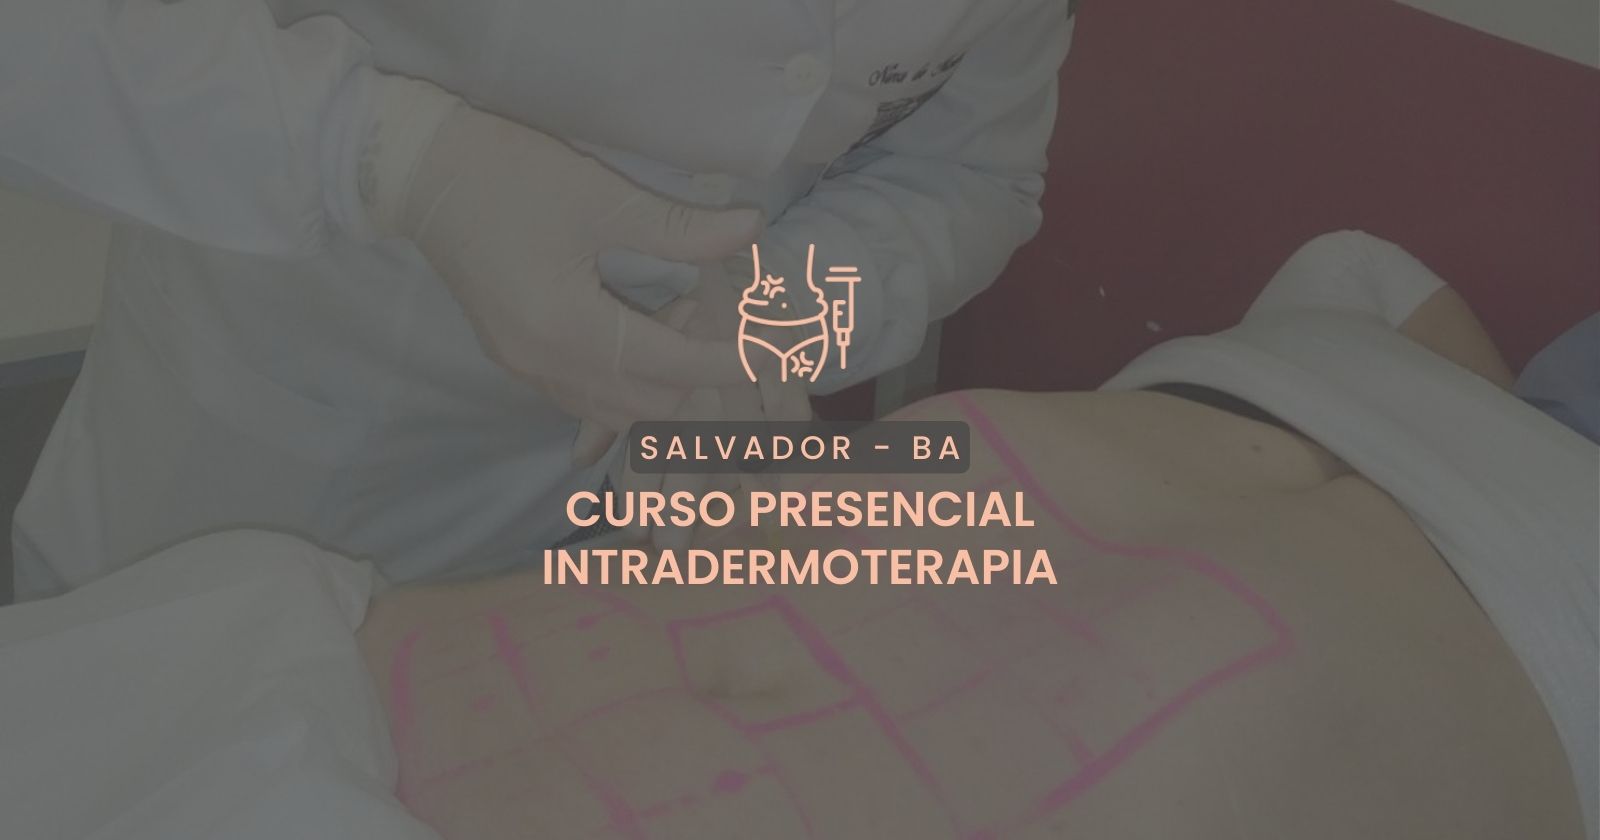 Curso presencial - Intradermoterapia Salvador